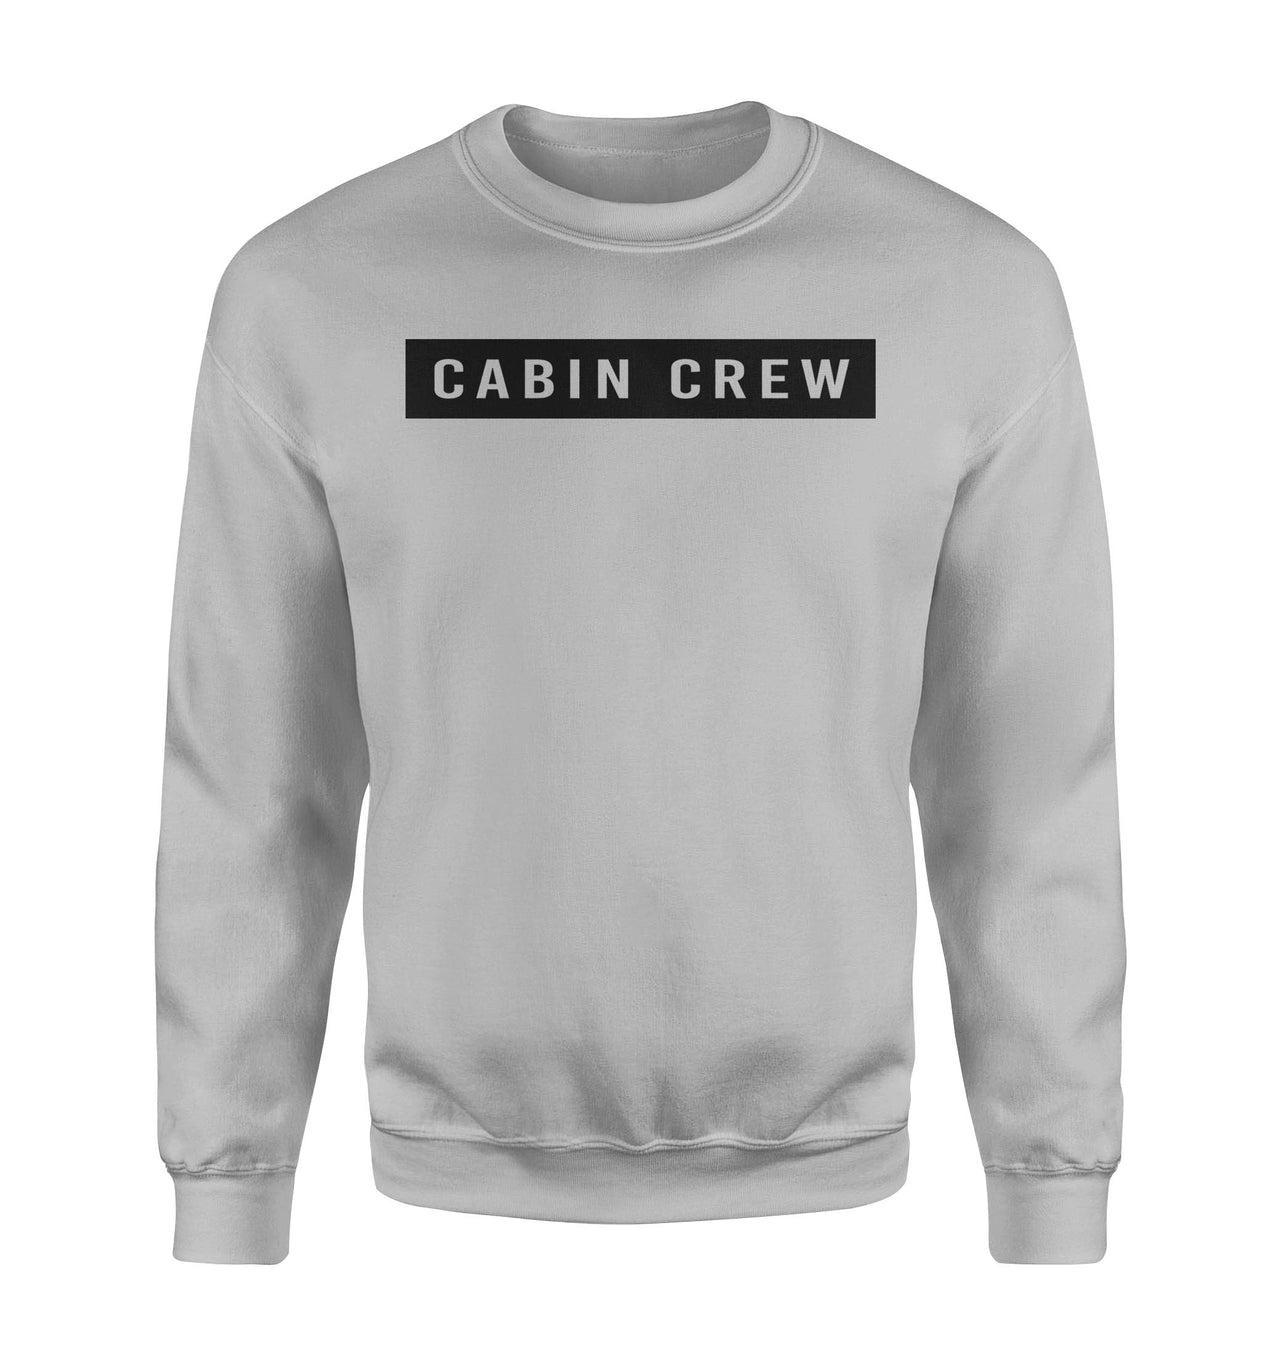 Cabin Crew Text Designed Sweatshirts